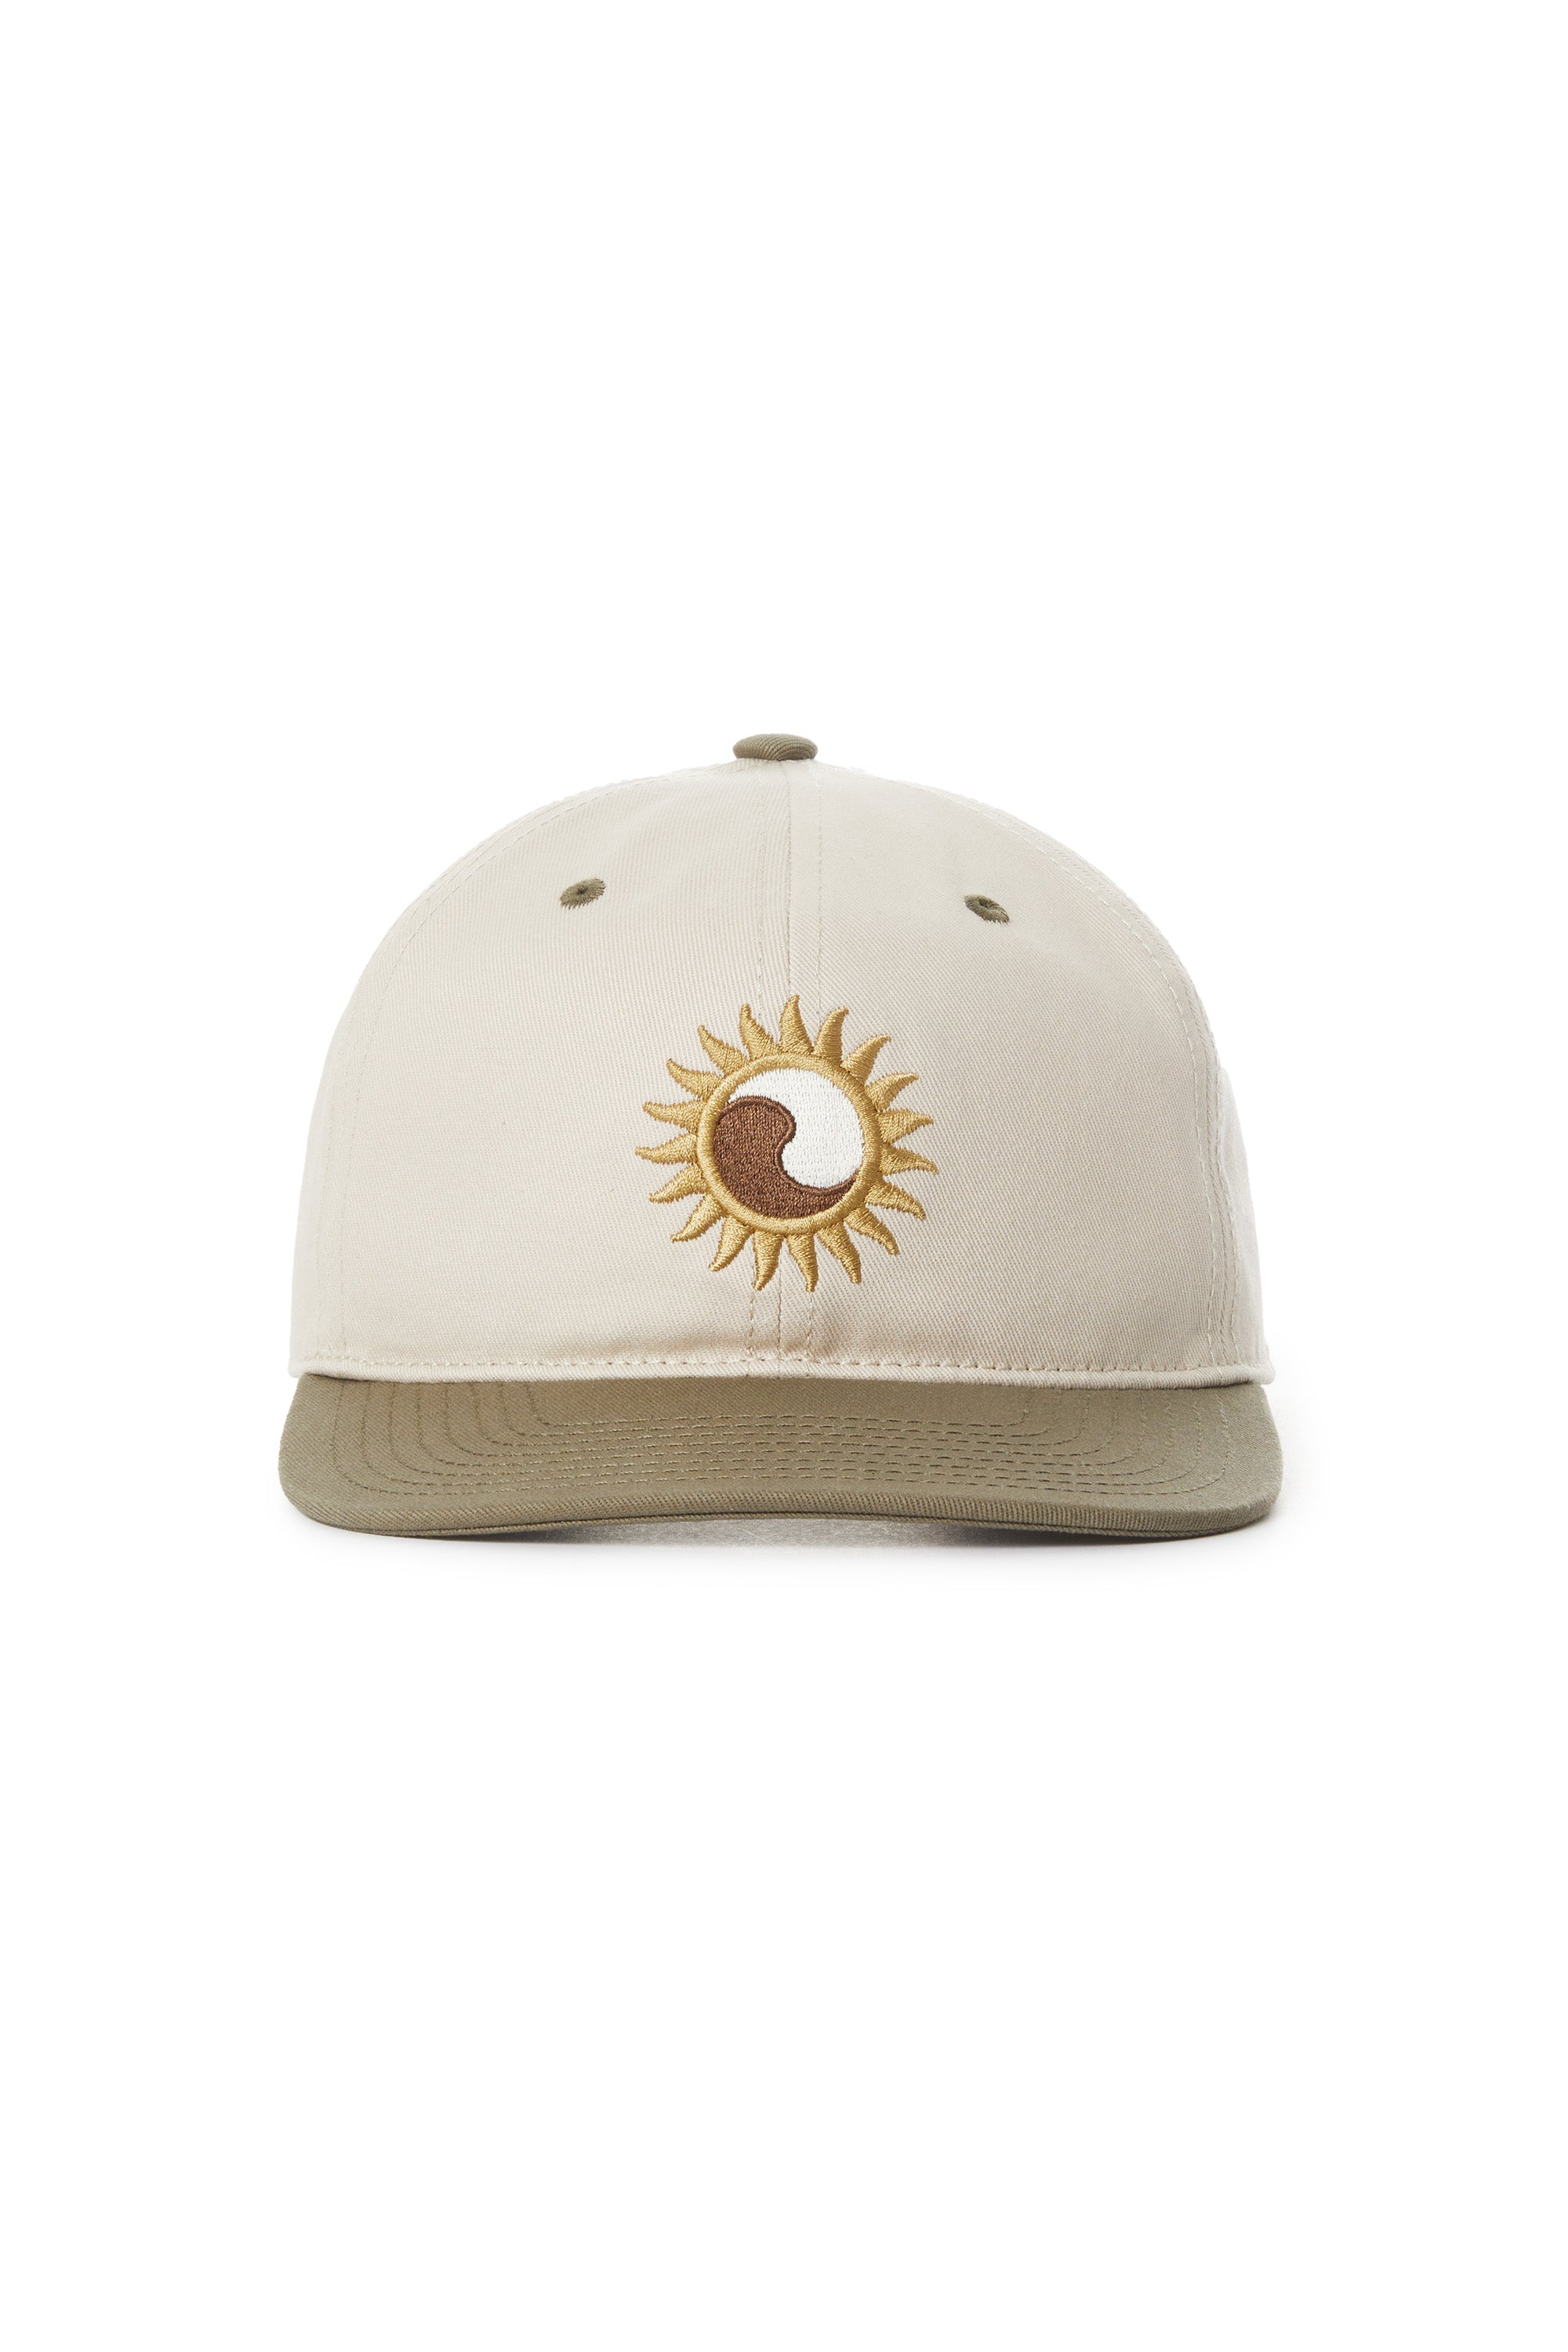 Sunfire Hat "Olive"